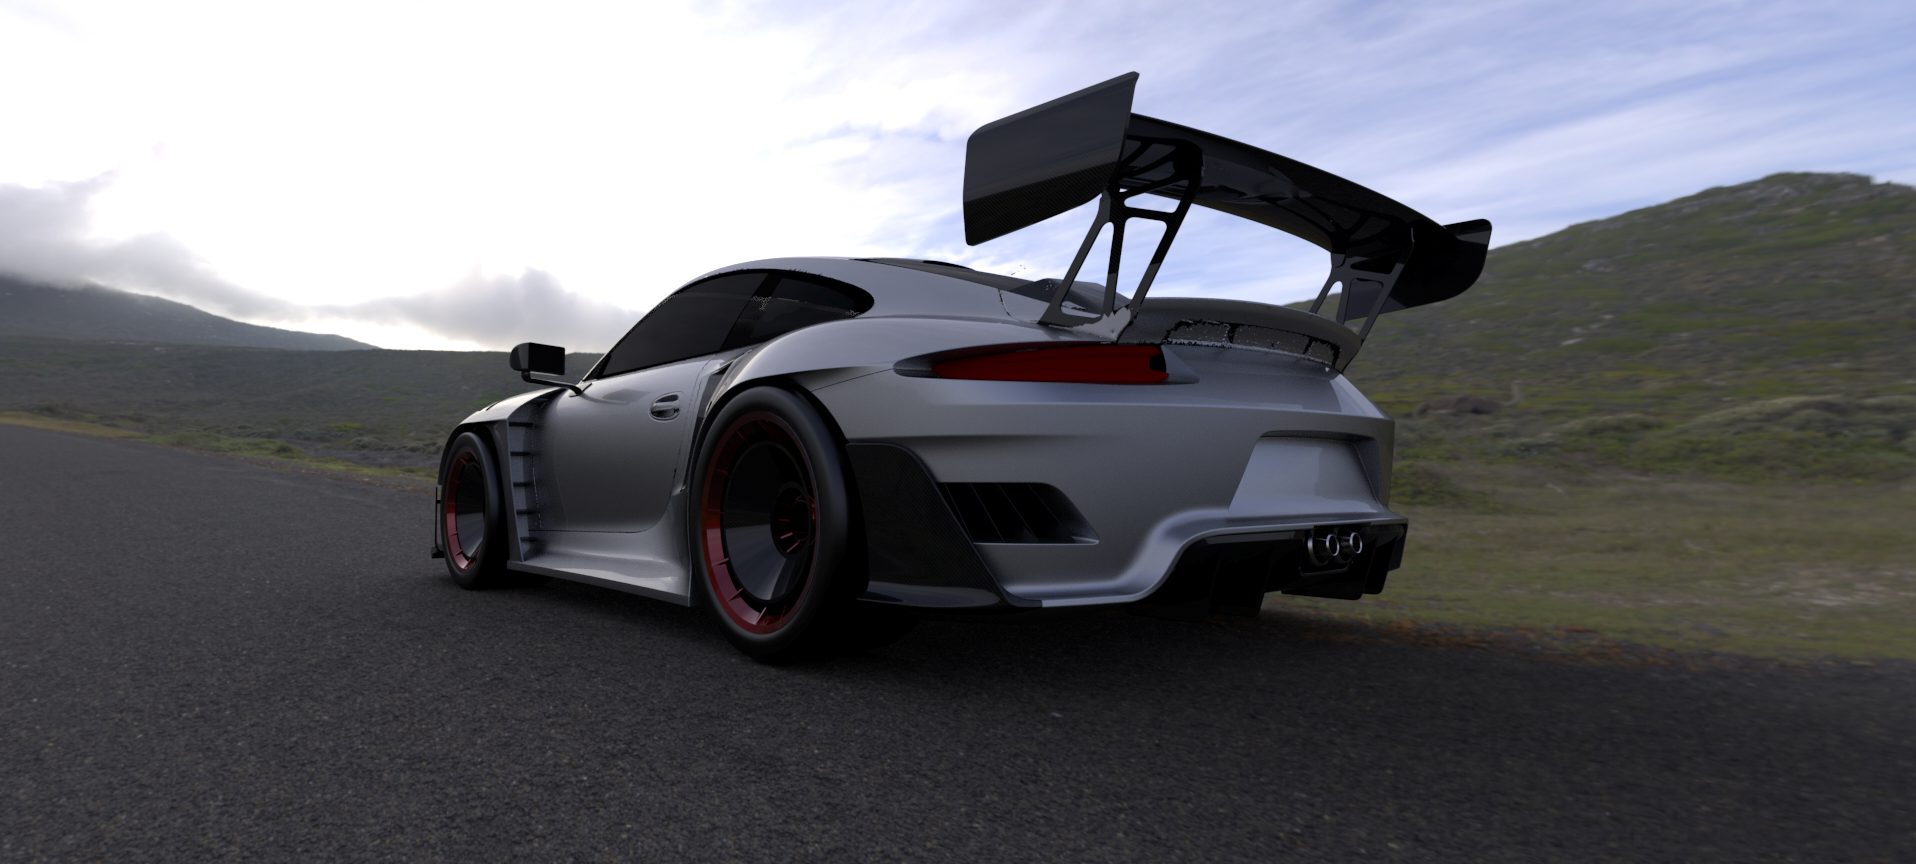 Check price and buy Duke Dynamics Body kit set for Porsche 911 991 GT RSR